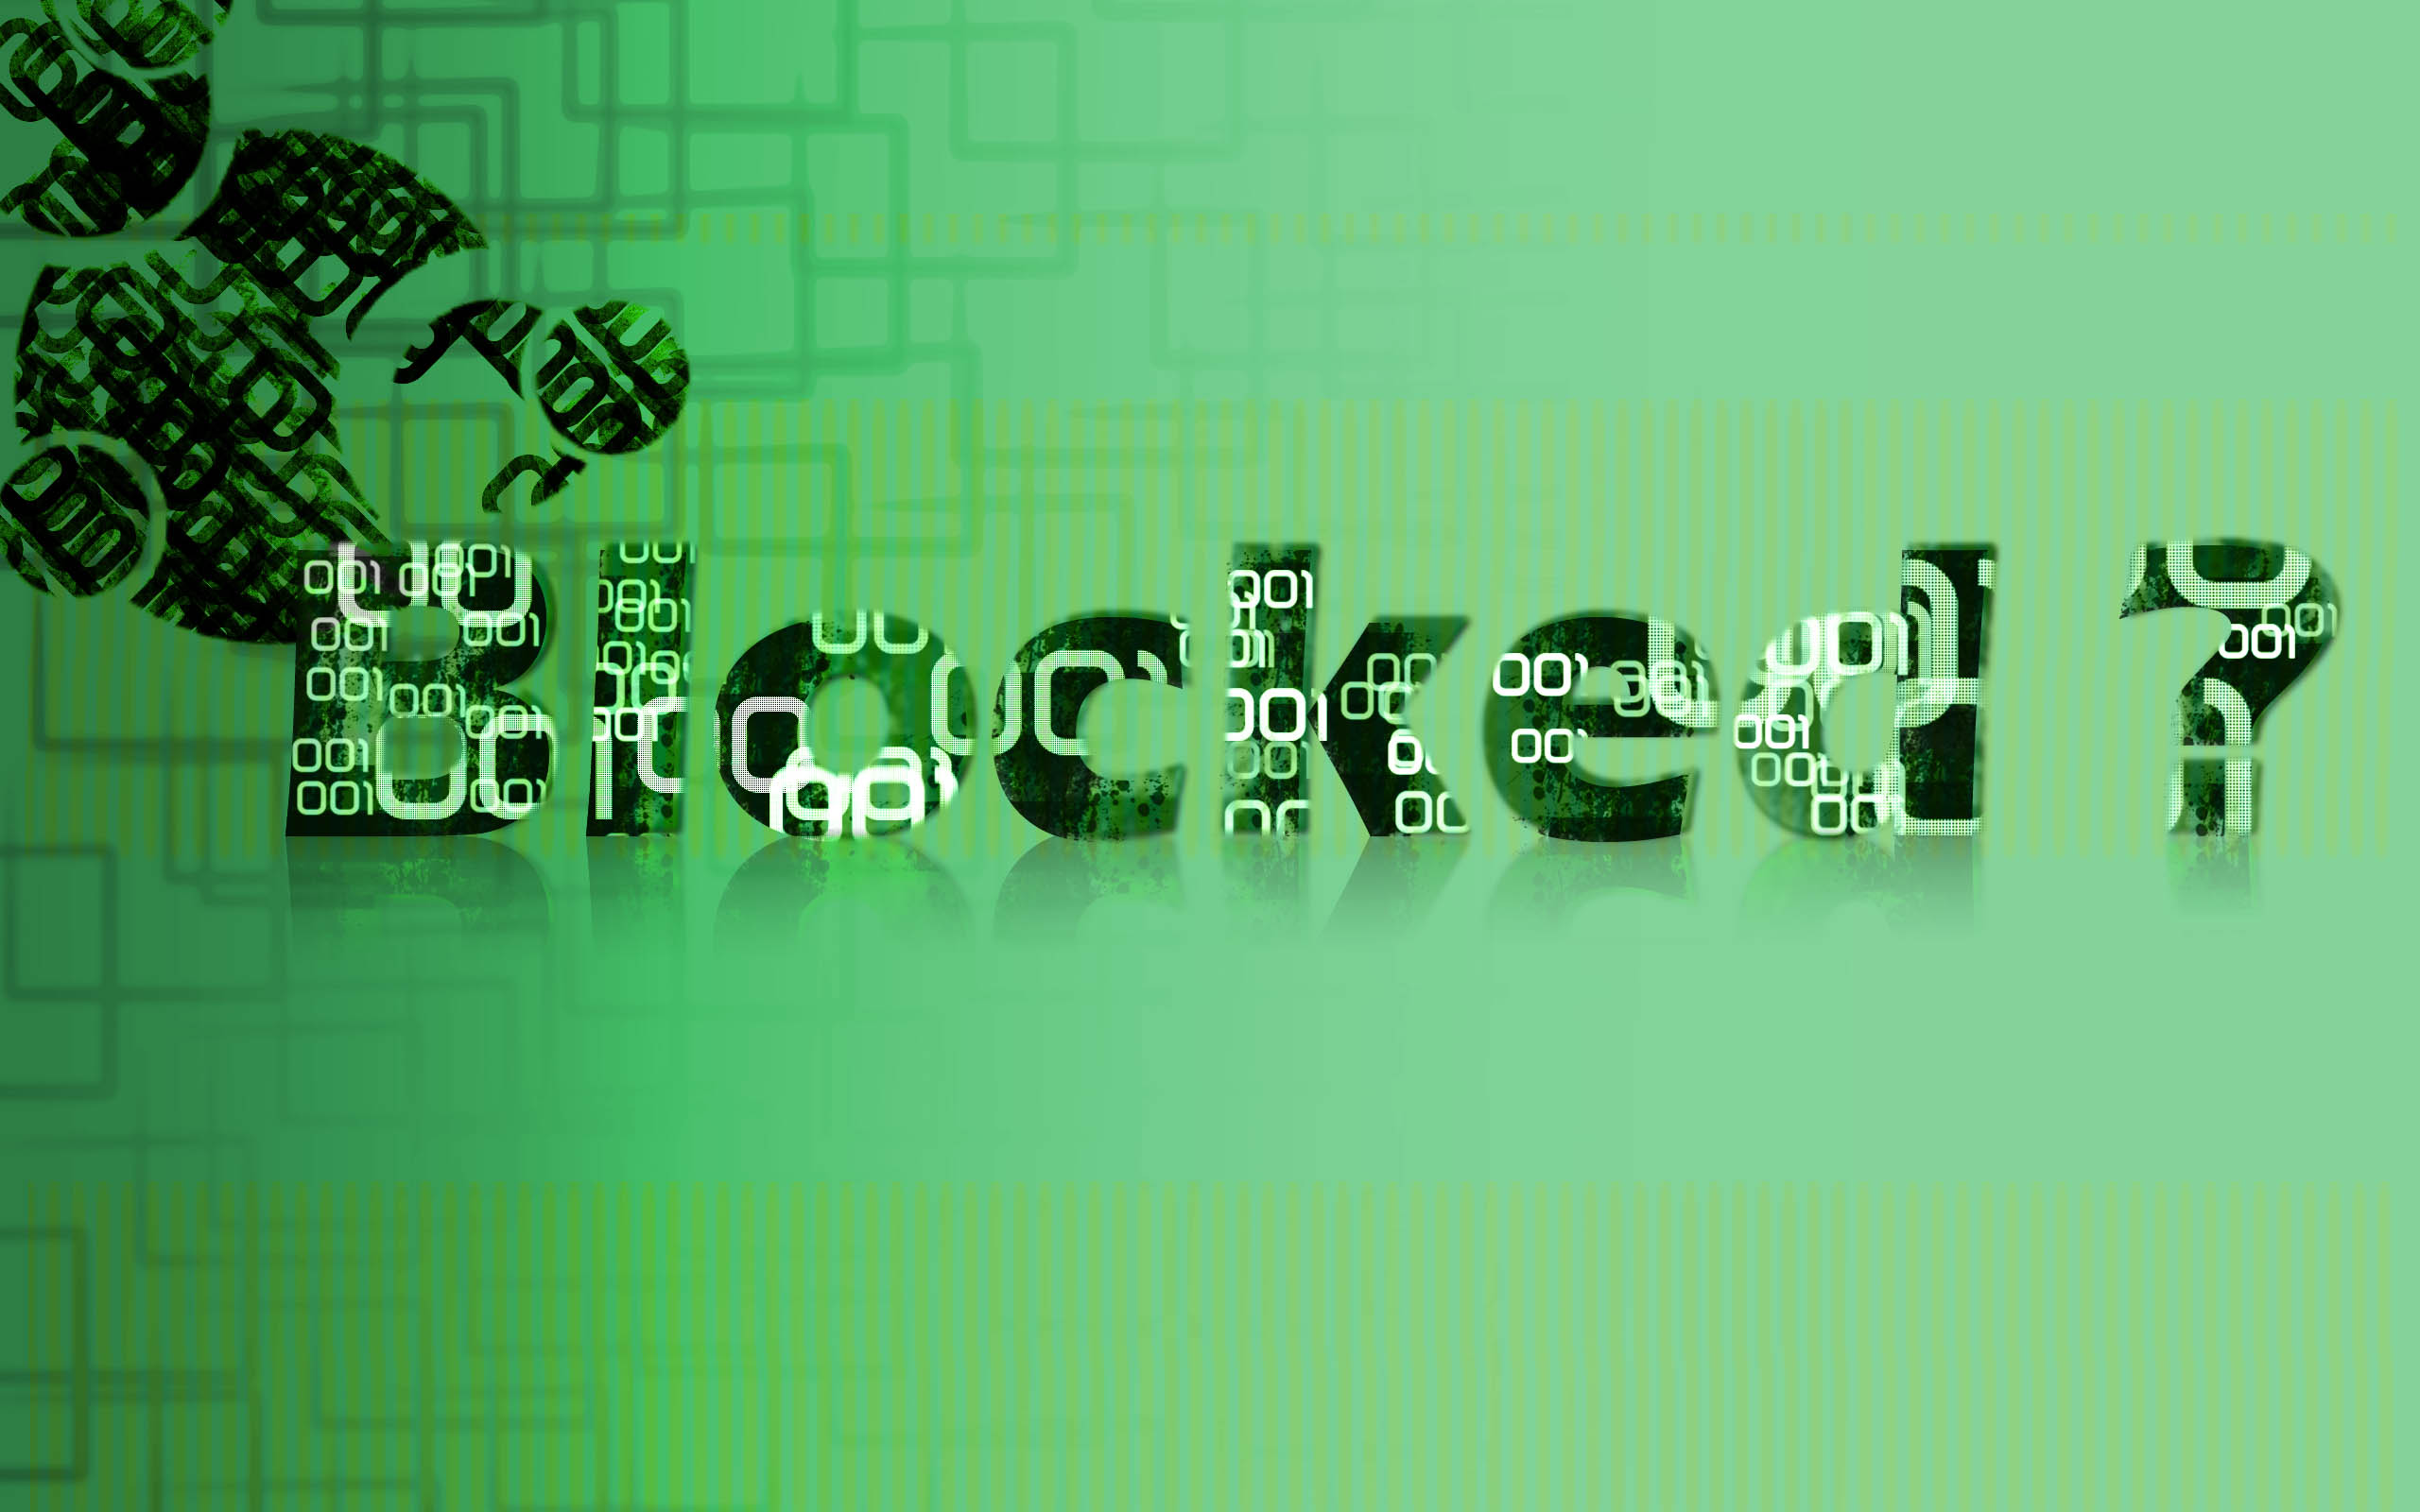 Windows Backgrounds binary, computer, technology, ball, blocked, green